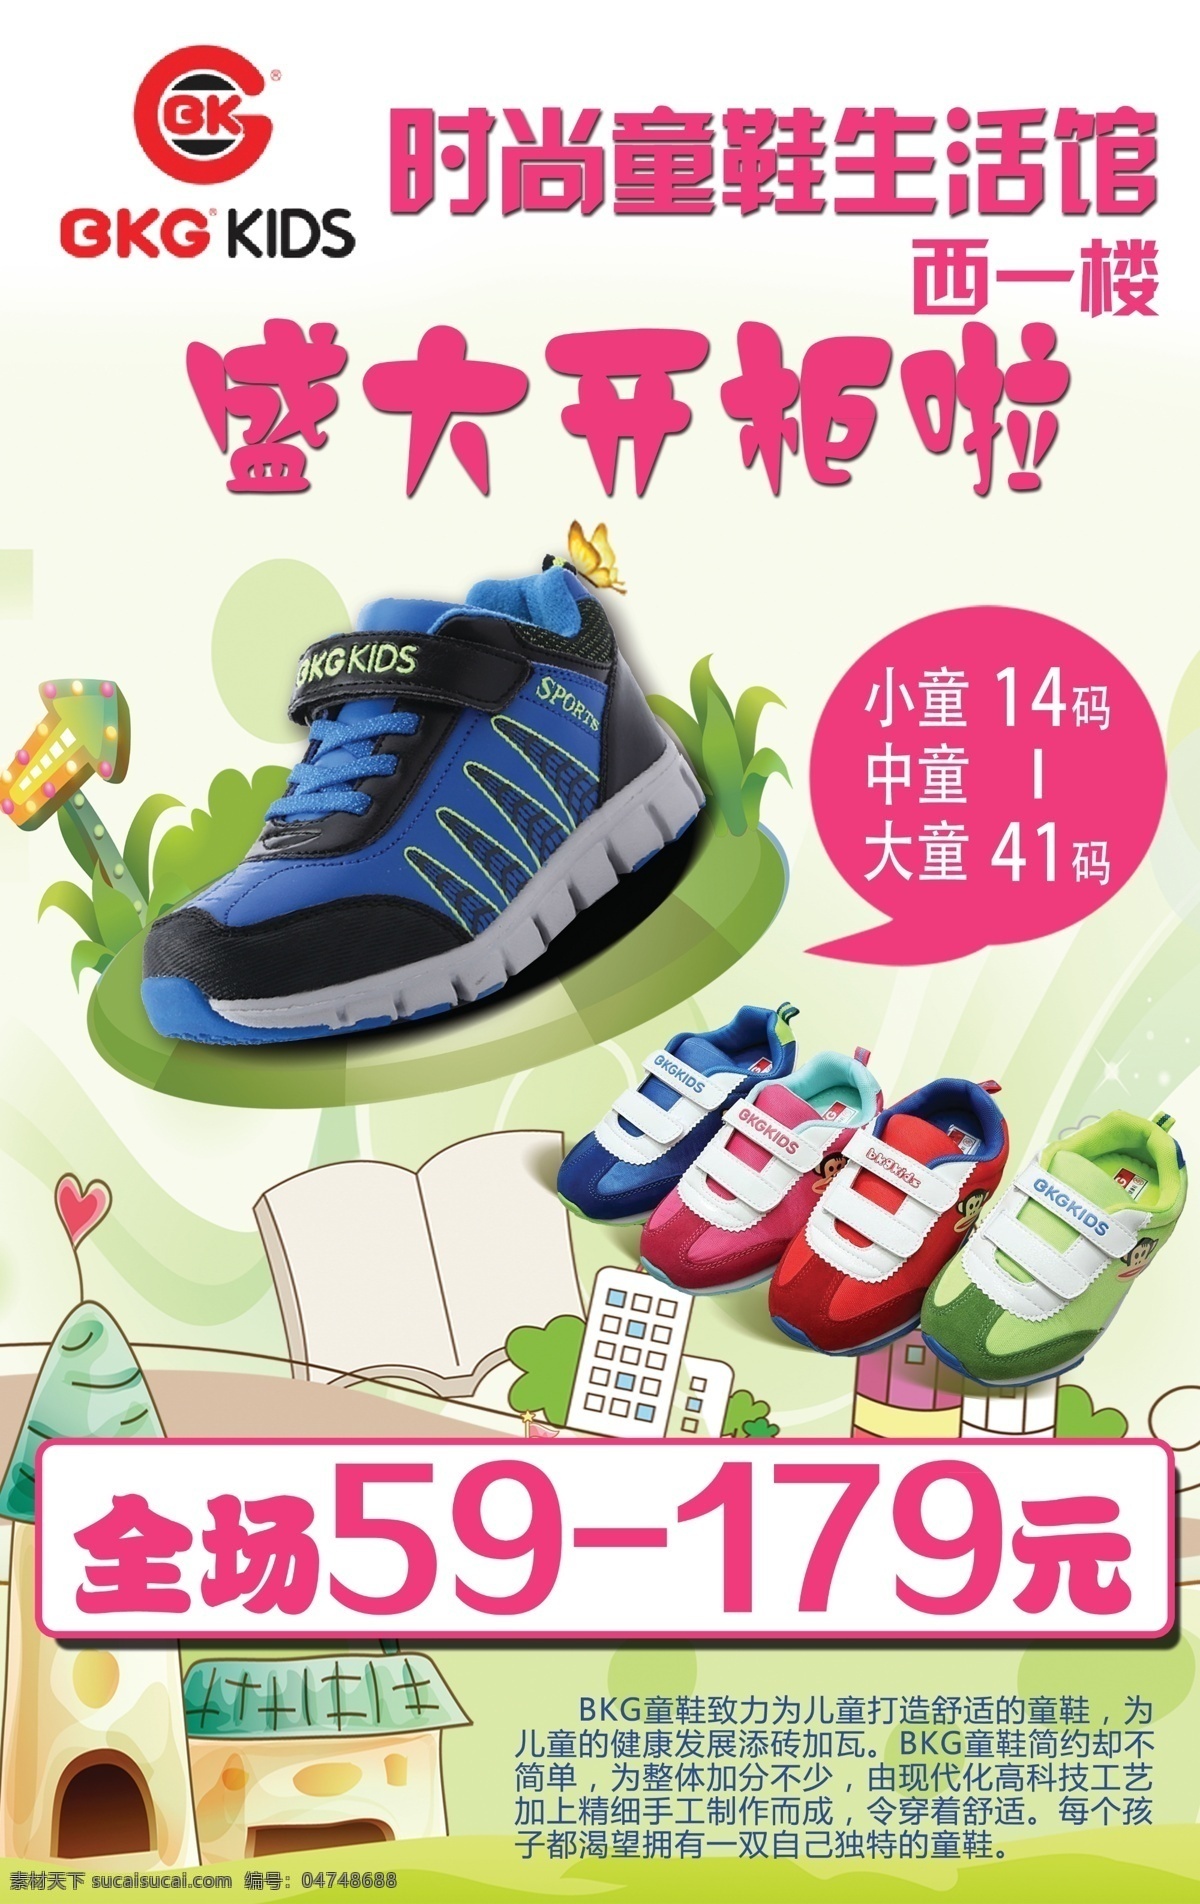 bkg 时尚 童鞋 盛大开柜 儿童鞋 商场促销 促销海报